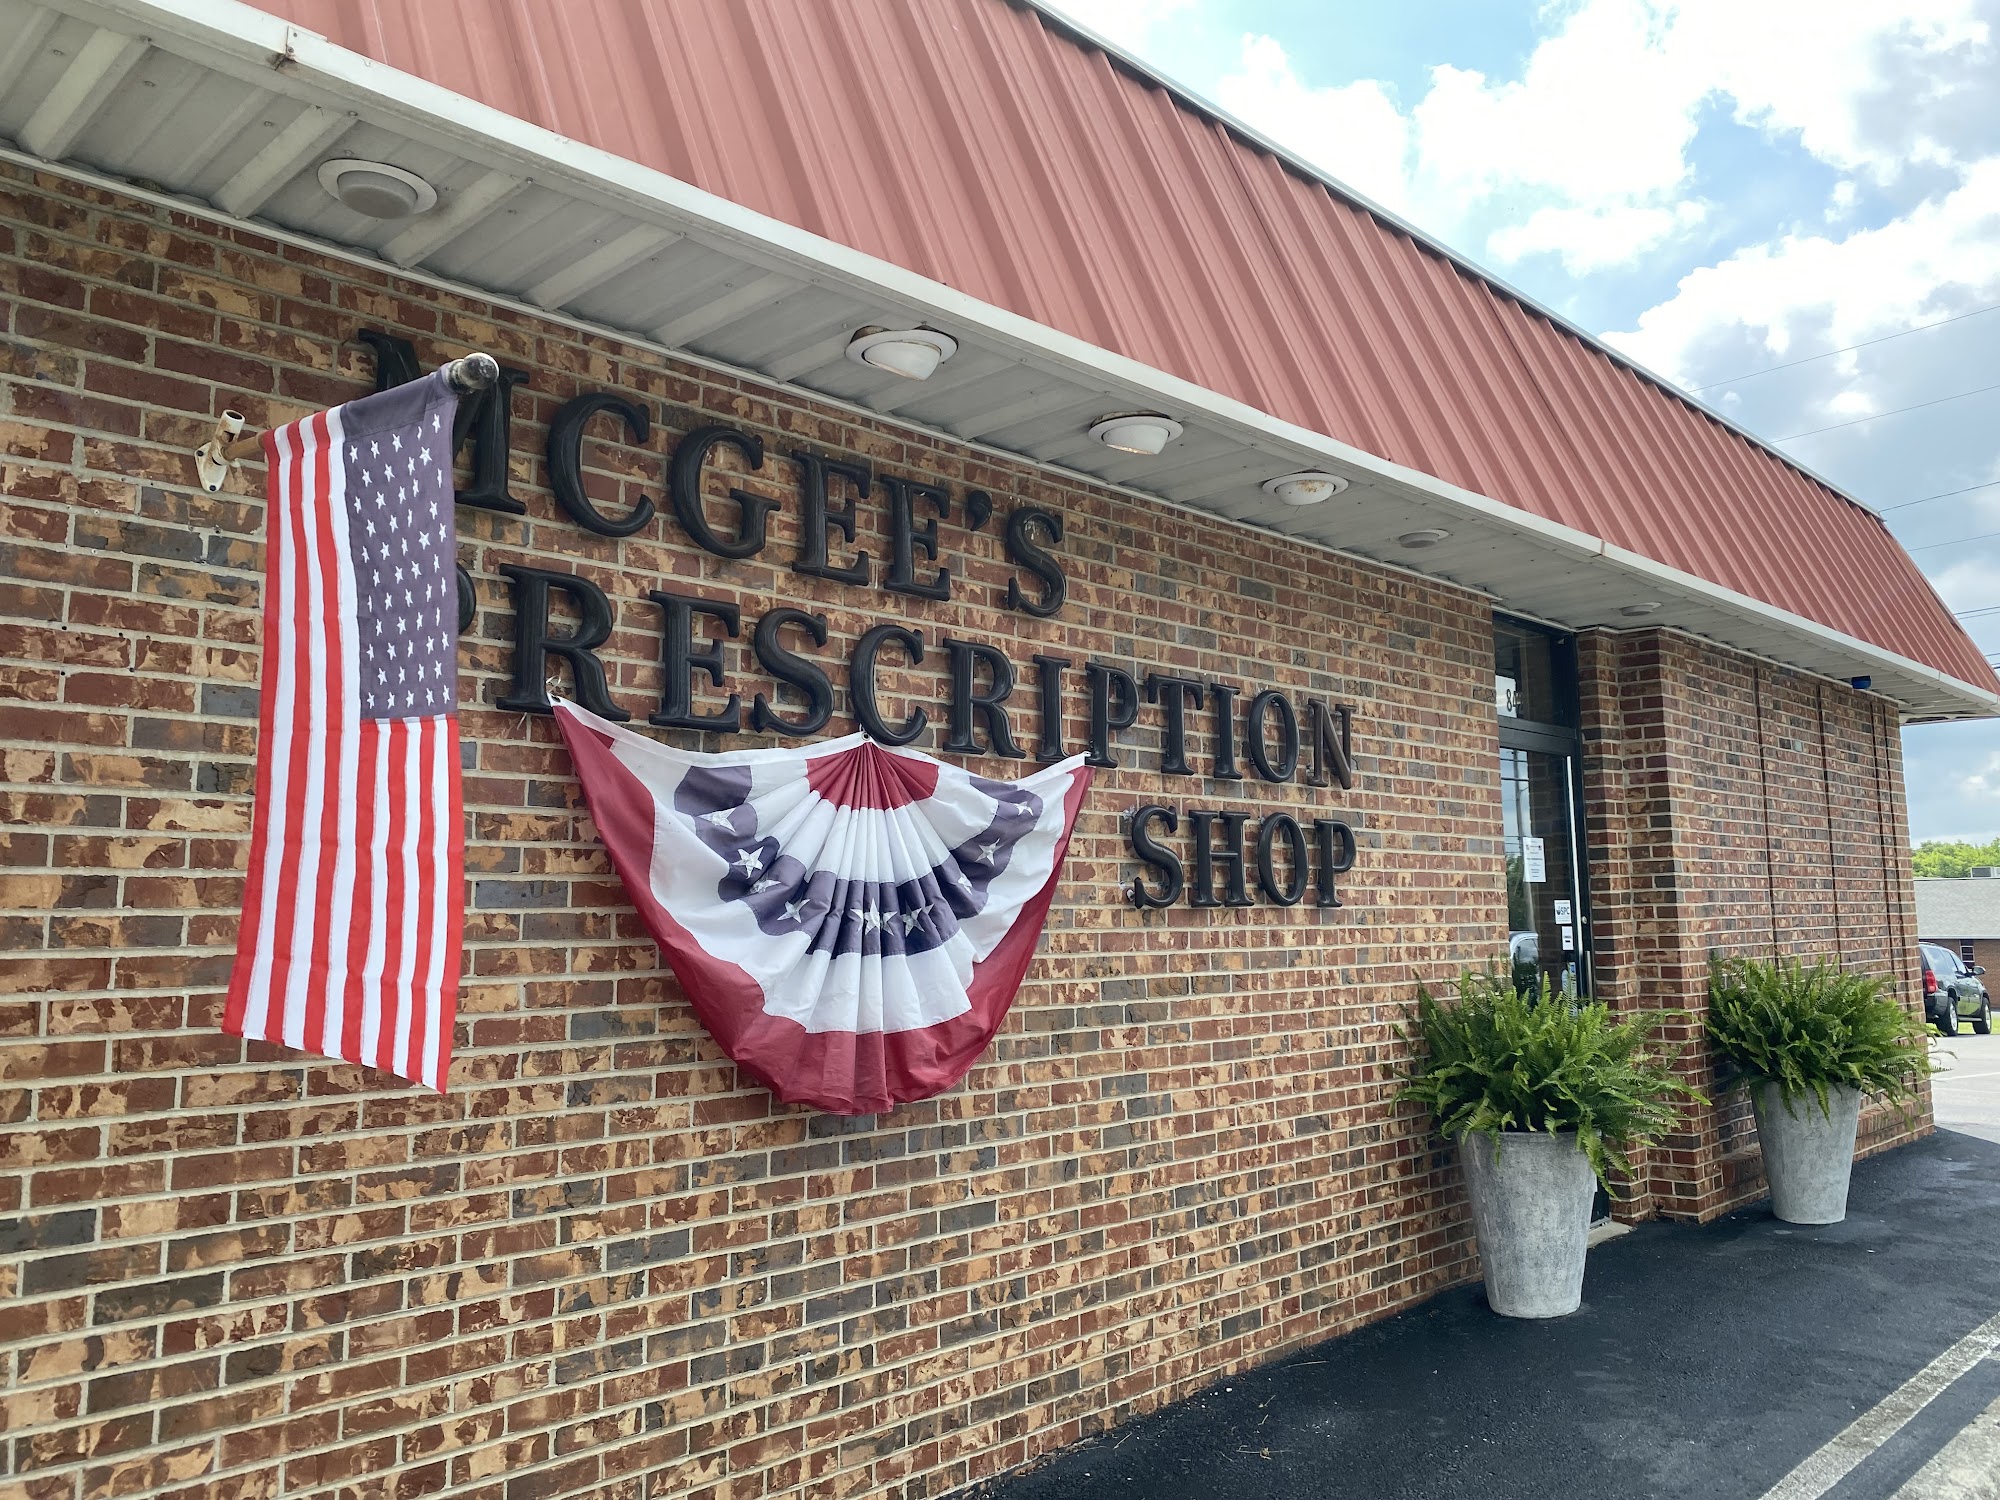 McGee's Prescription Shop